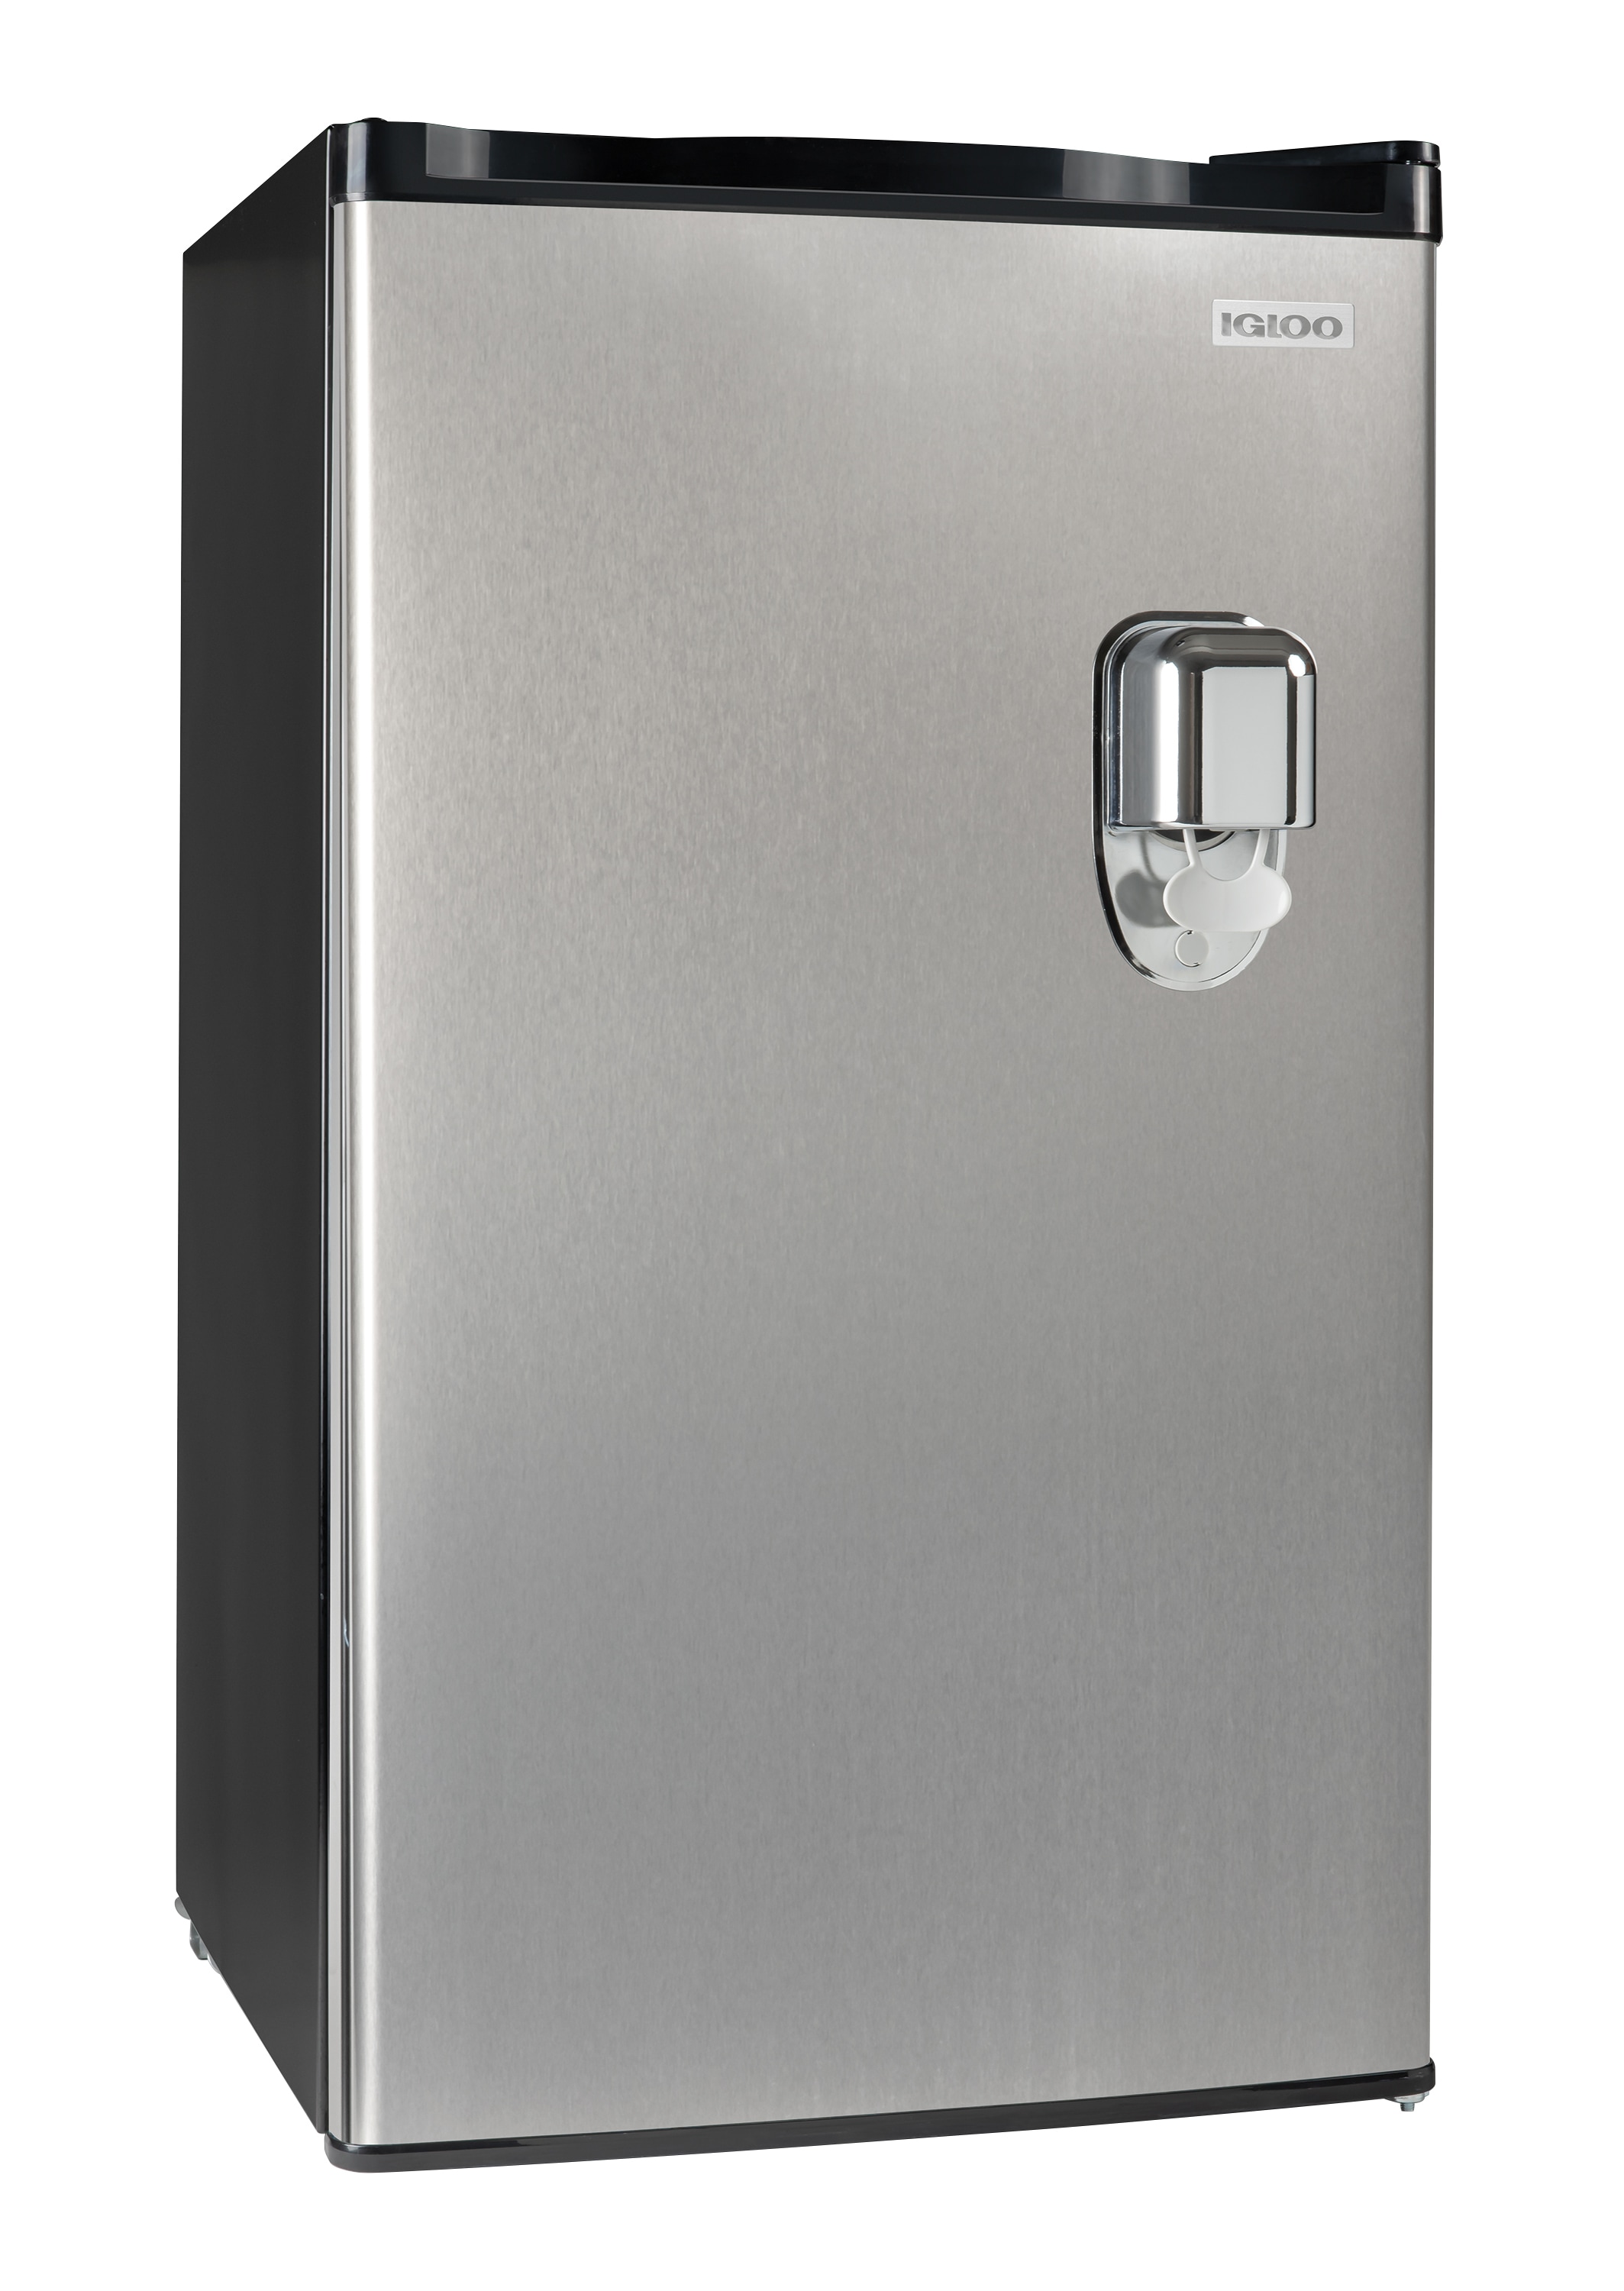  3.2 Cu. Ft. Stainless Steel Double Doors Compact Mini  Refrigerator Internal Freezer Compartment Cooler Fridge Perfect For Home  Kitchen Hotel Office Dorm Wet Bars Adjustable Temperature Mechanism :  Appliances